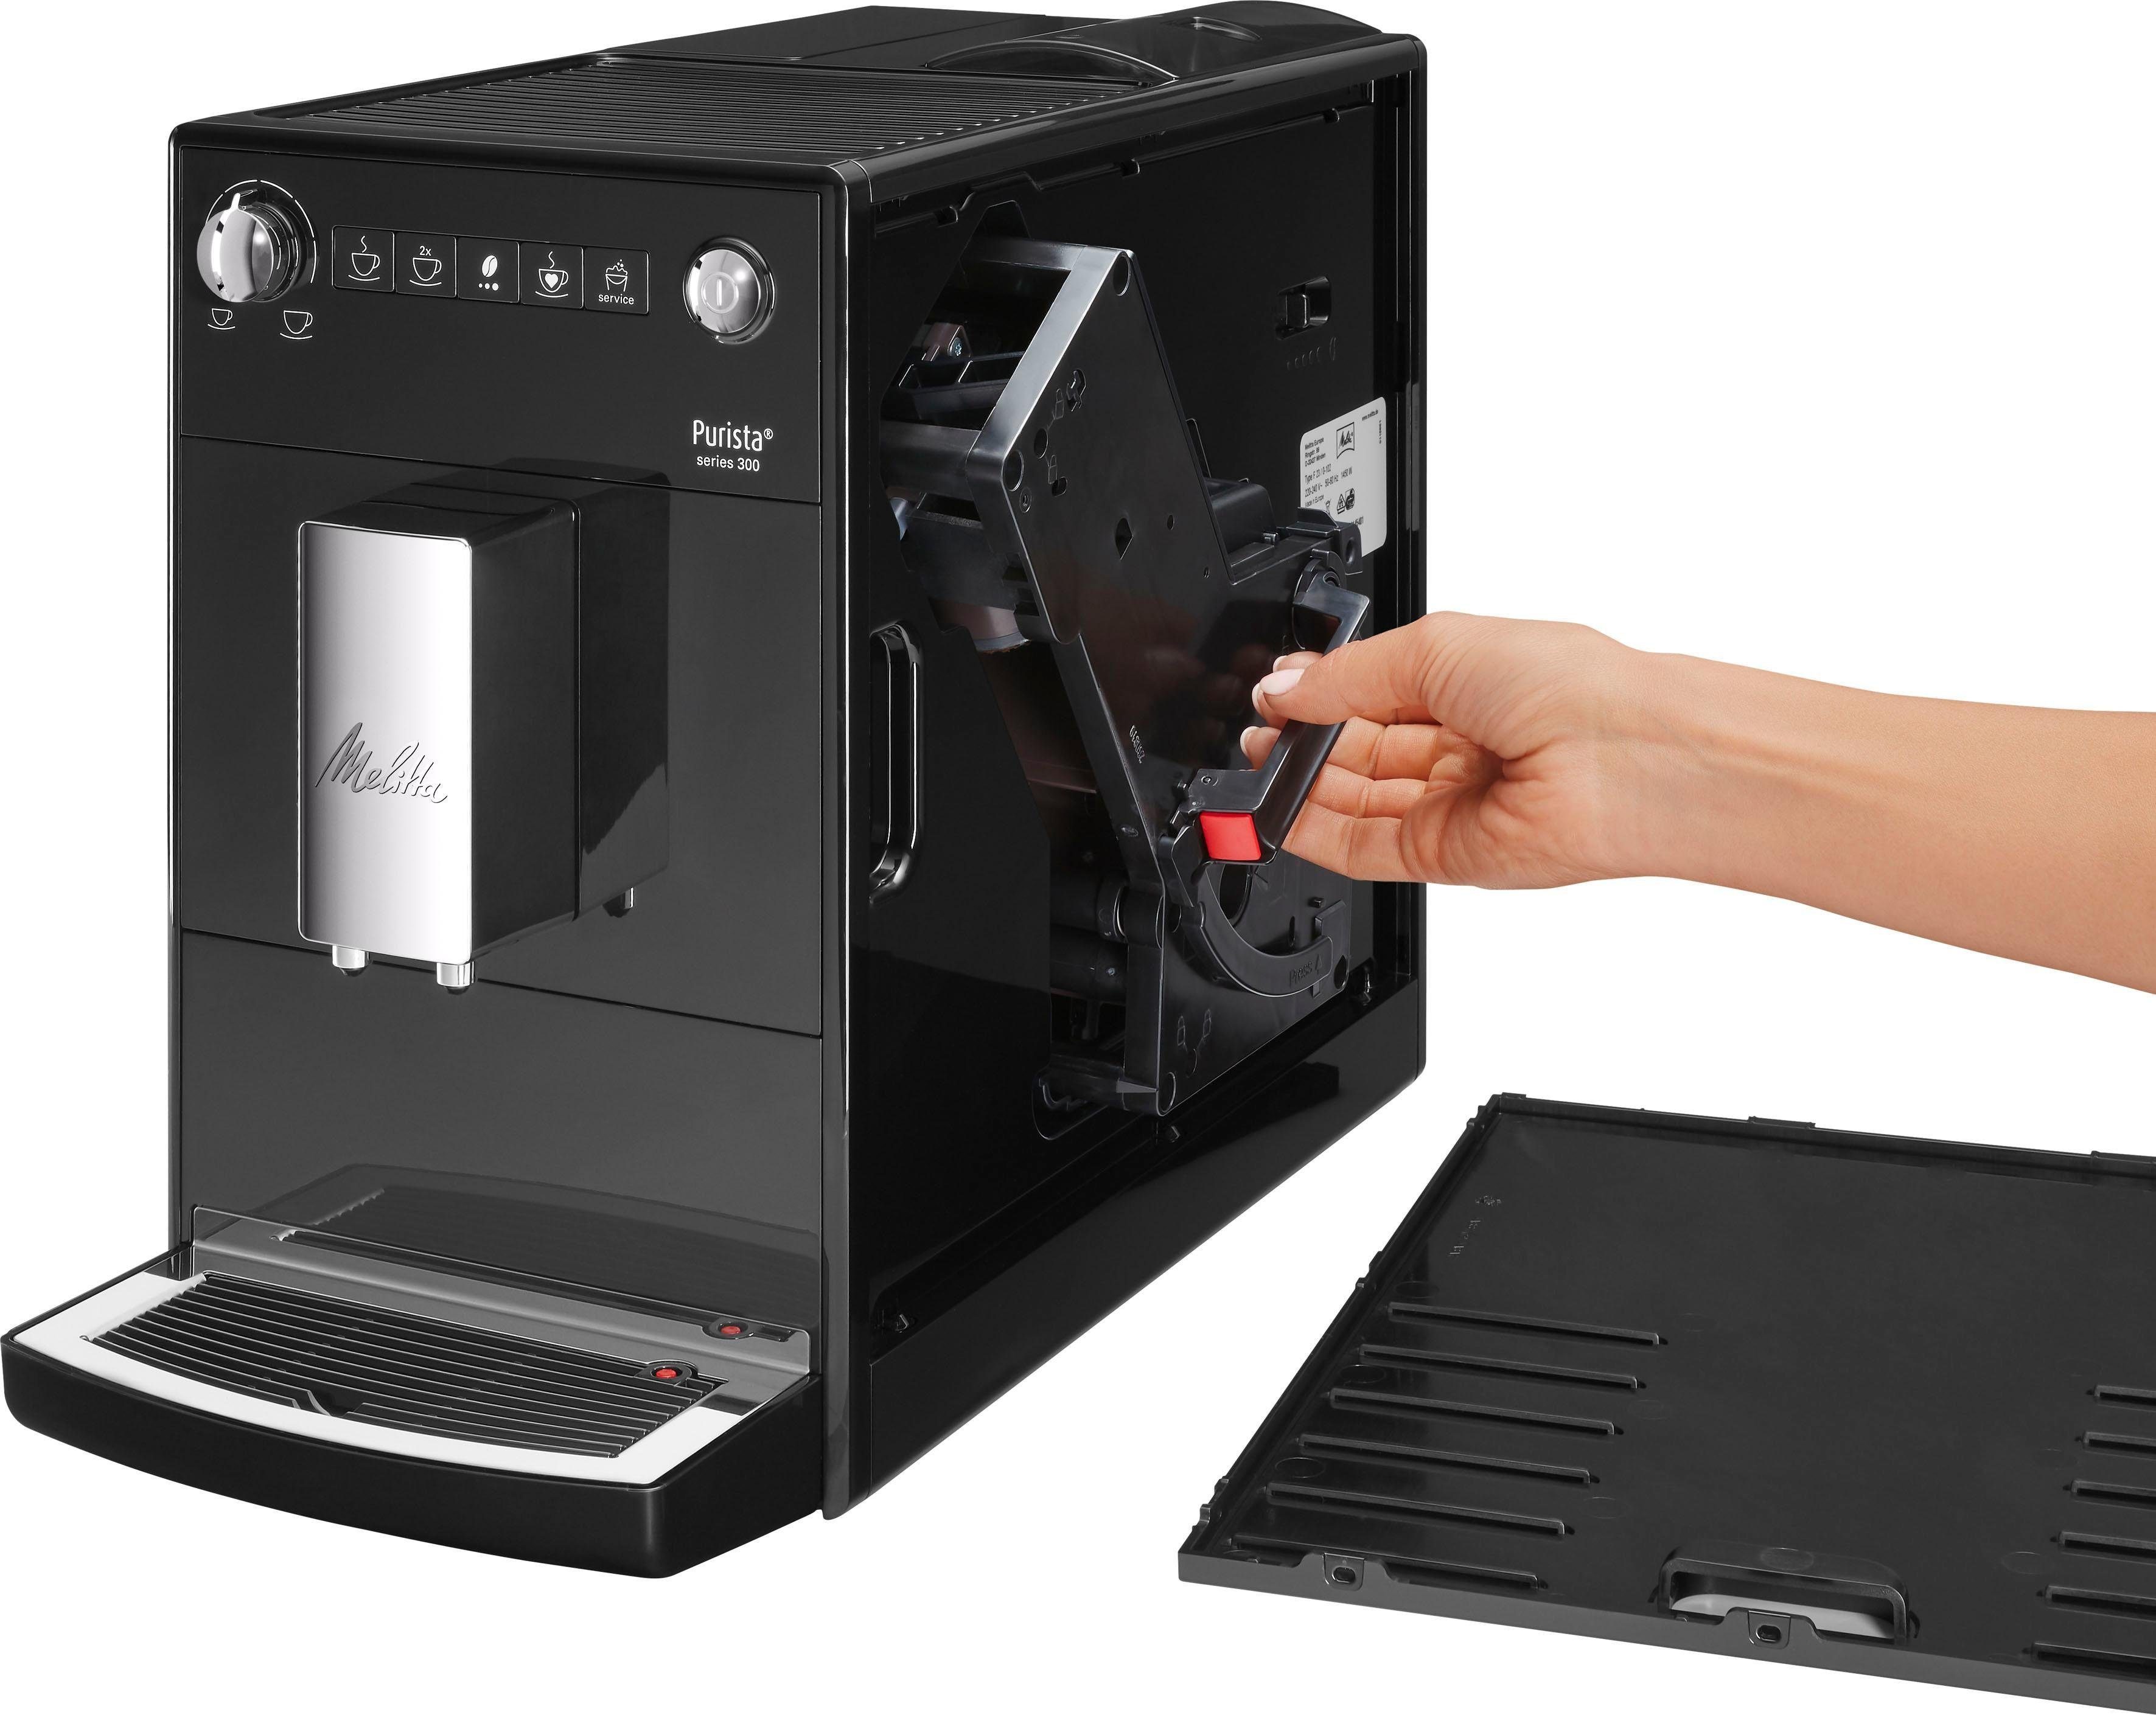 extra leise Lieblingskaffee-Funktion, Purista® kompakt Kaffeevollautomat F230-102, & schwarz, Melitta